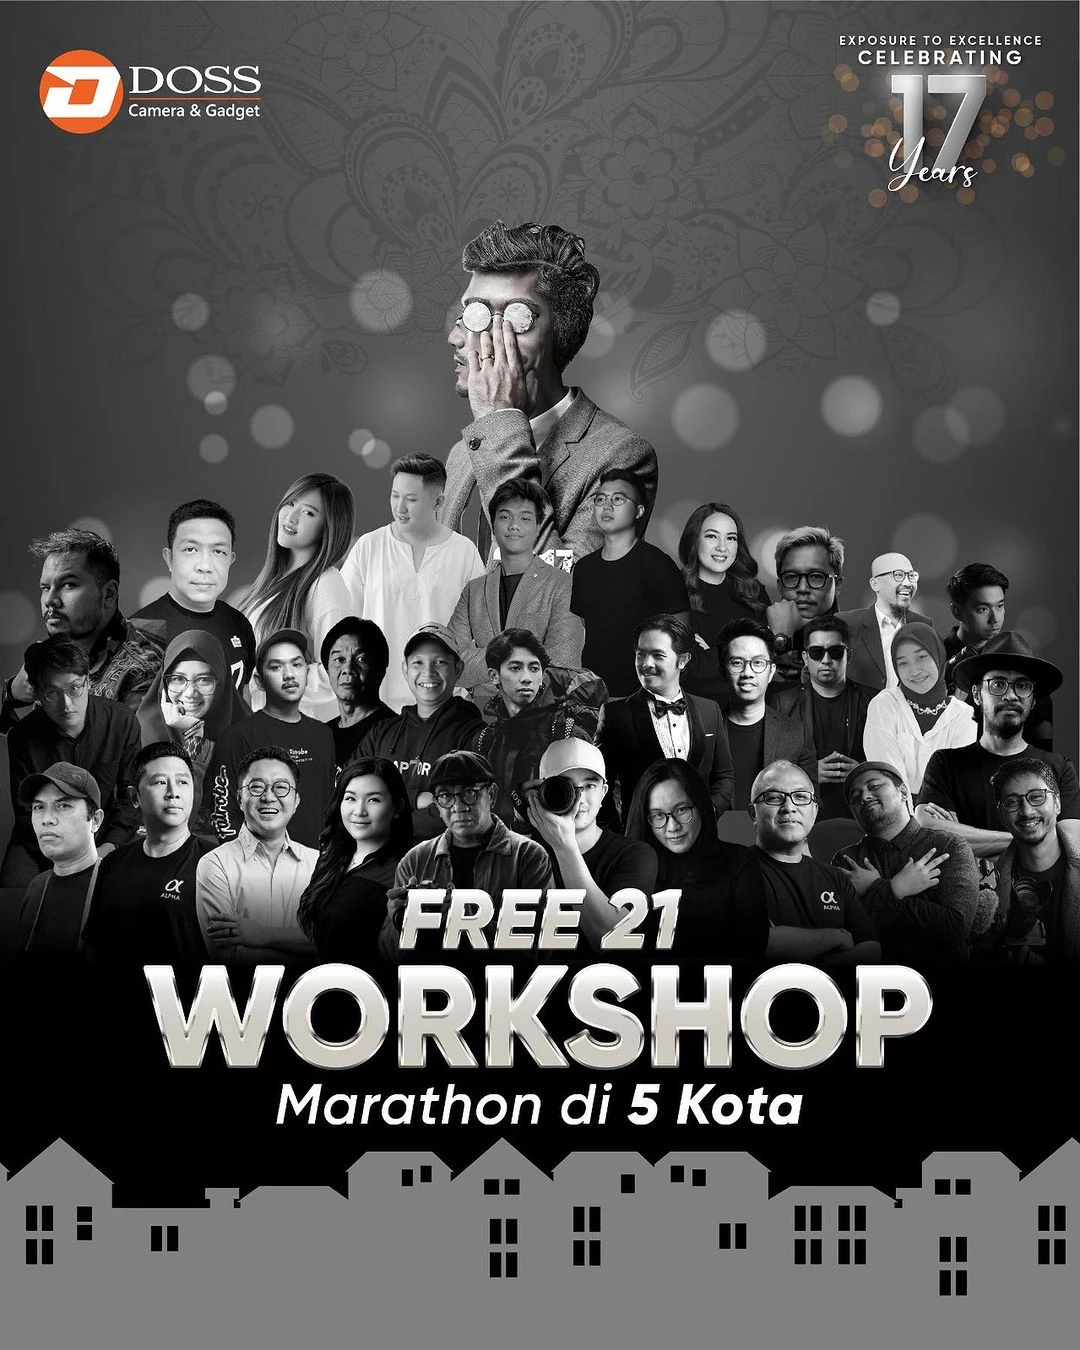 Ini Dia Daftar FreeWorkshop Fotografi & Videografi Di Jakarta Special DOSS Anniversary ke 17, Jangan Lupa Buat Ikutan.